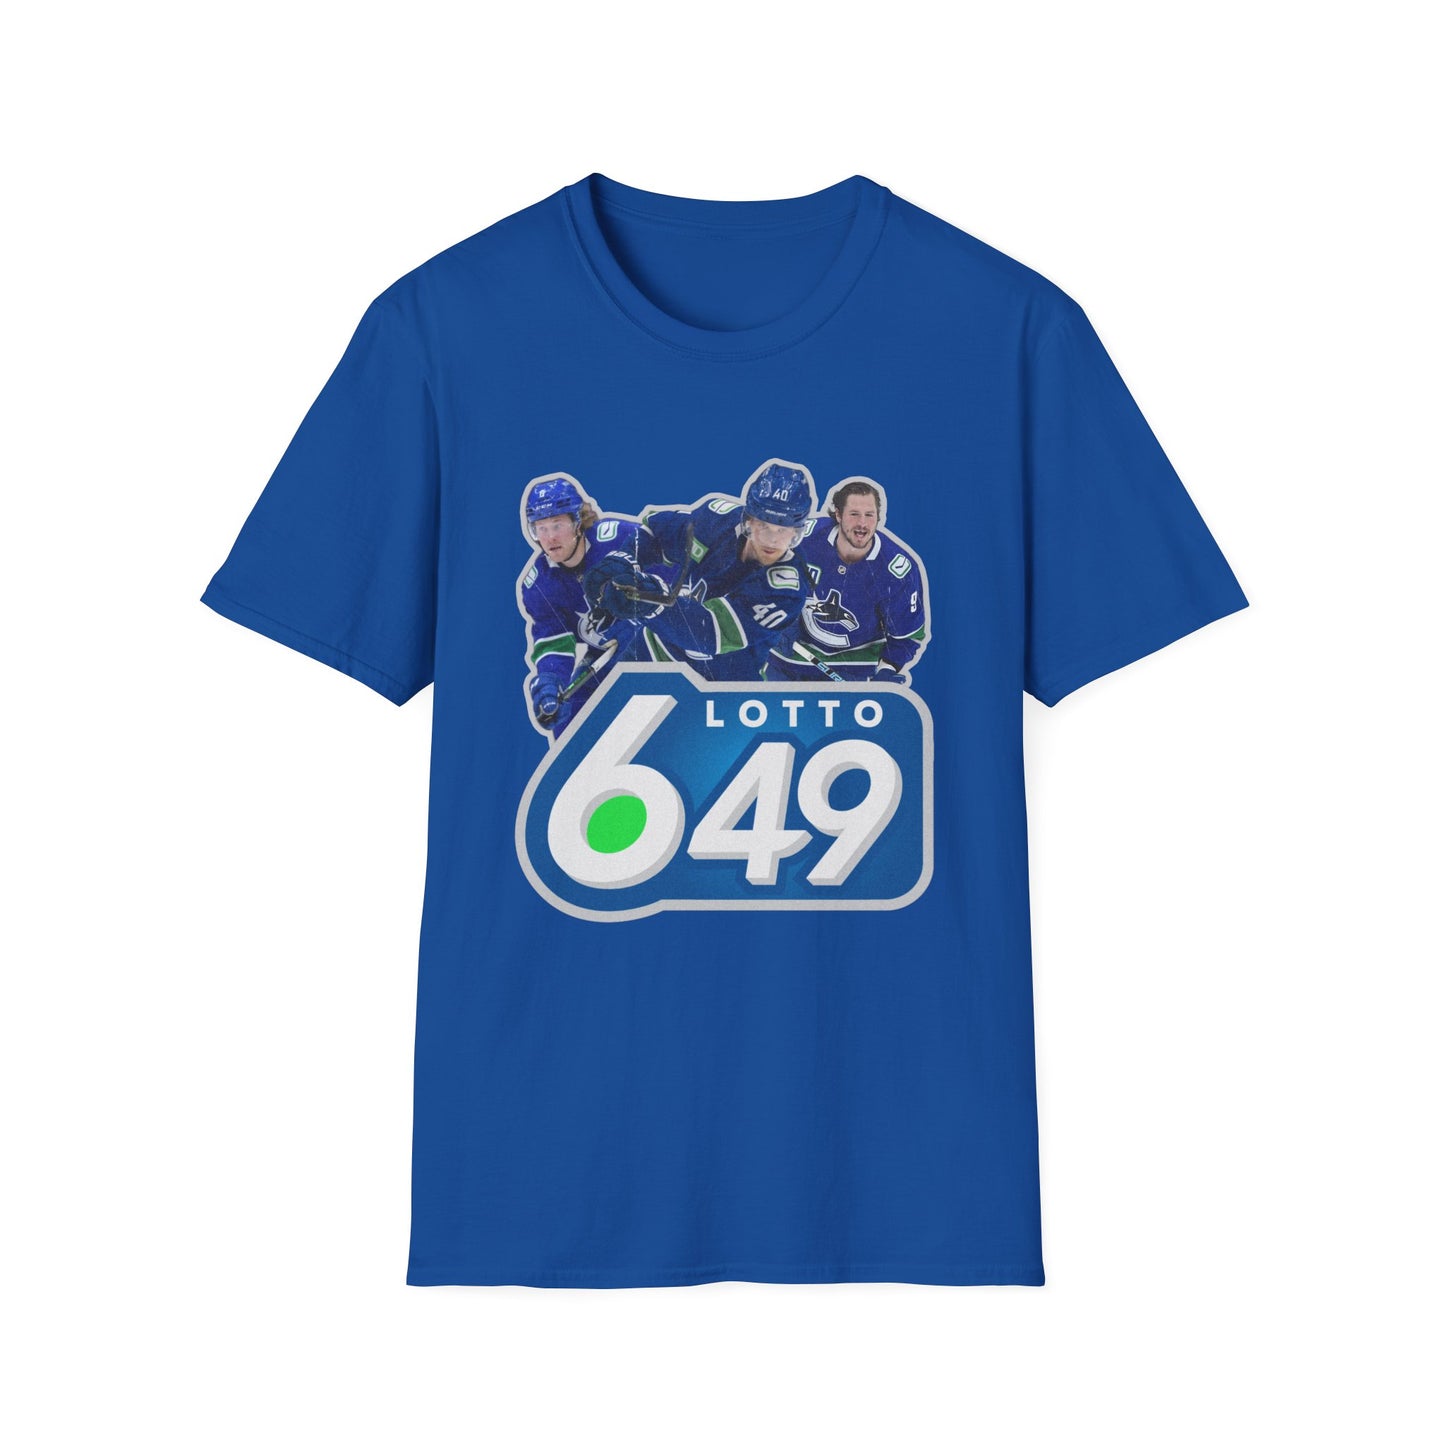 Lotto 649 T-Shirt